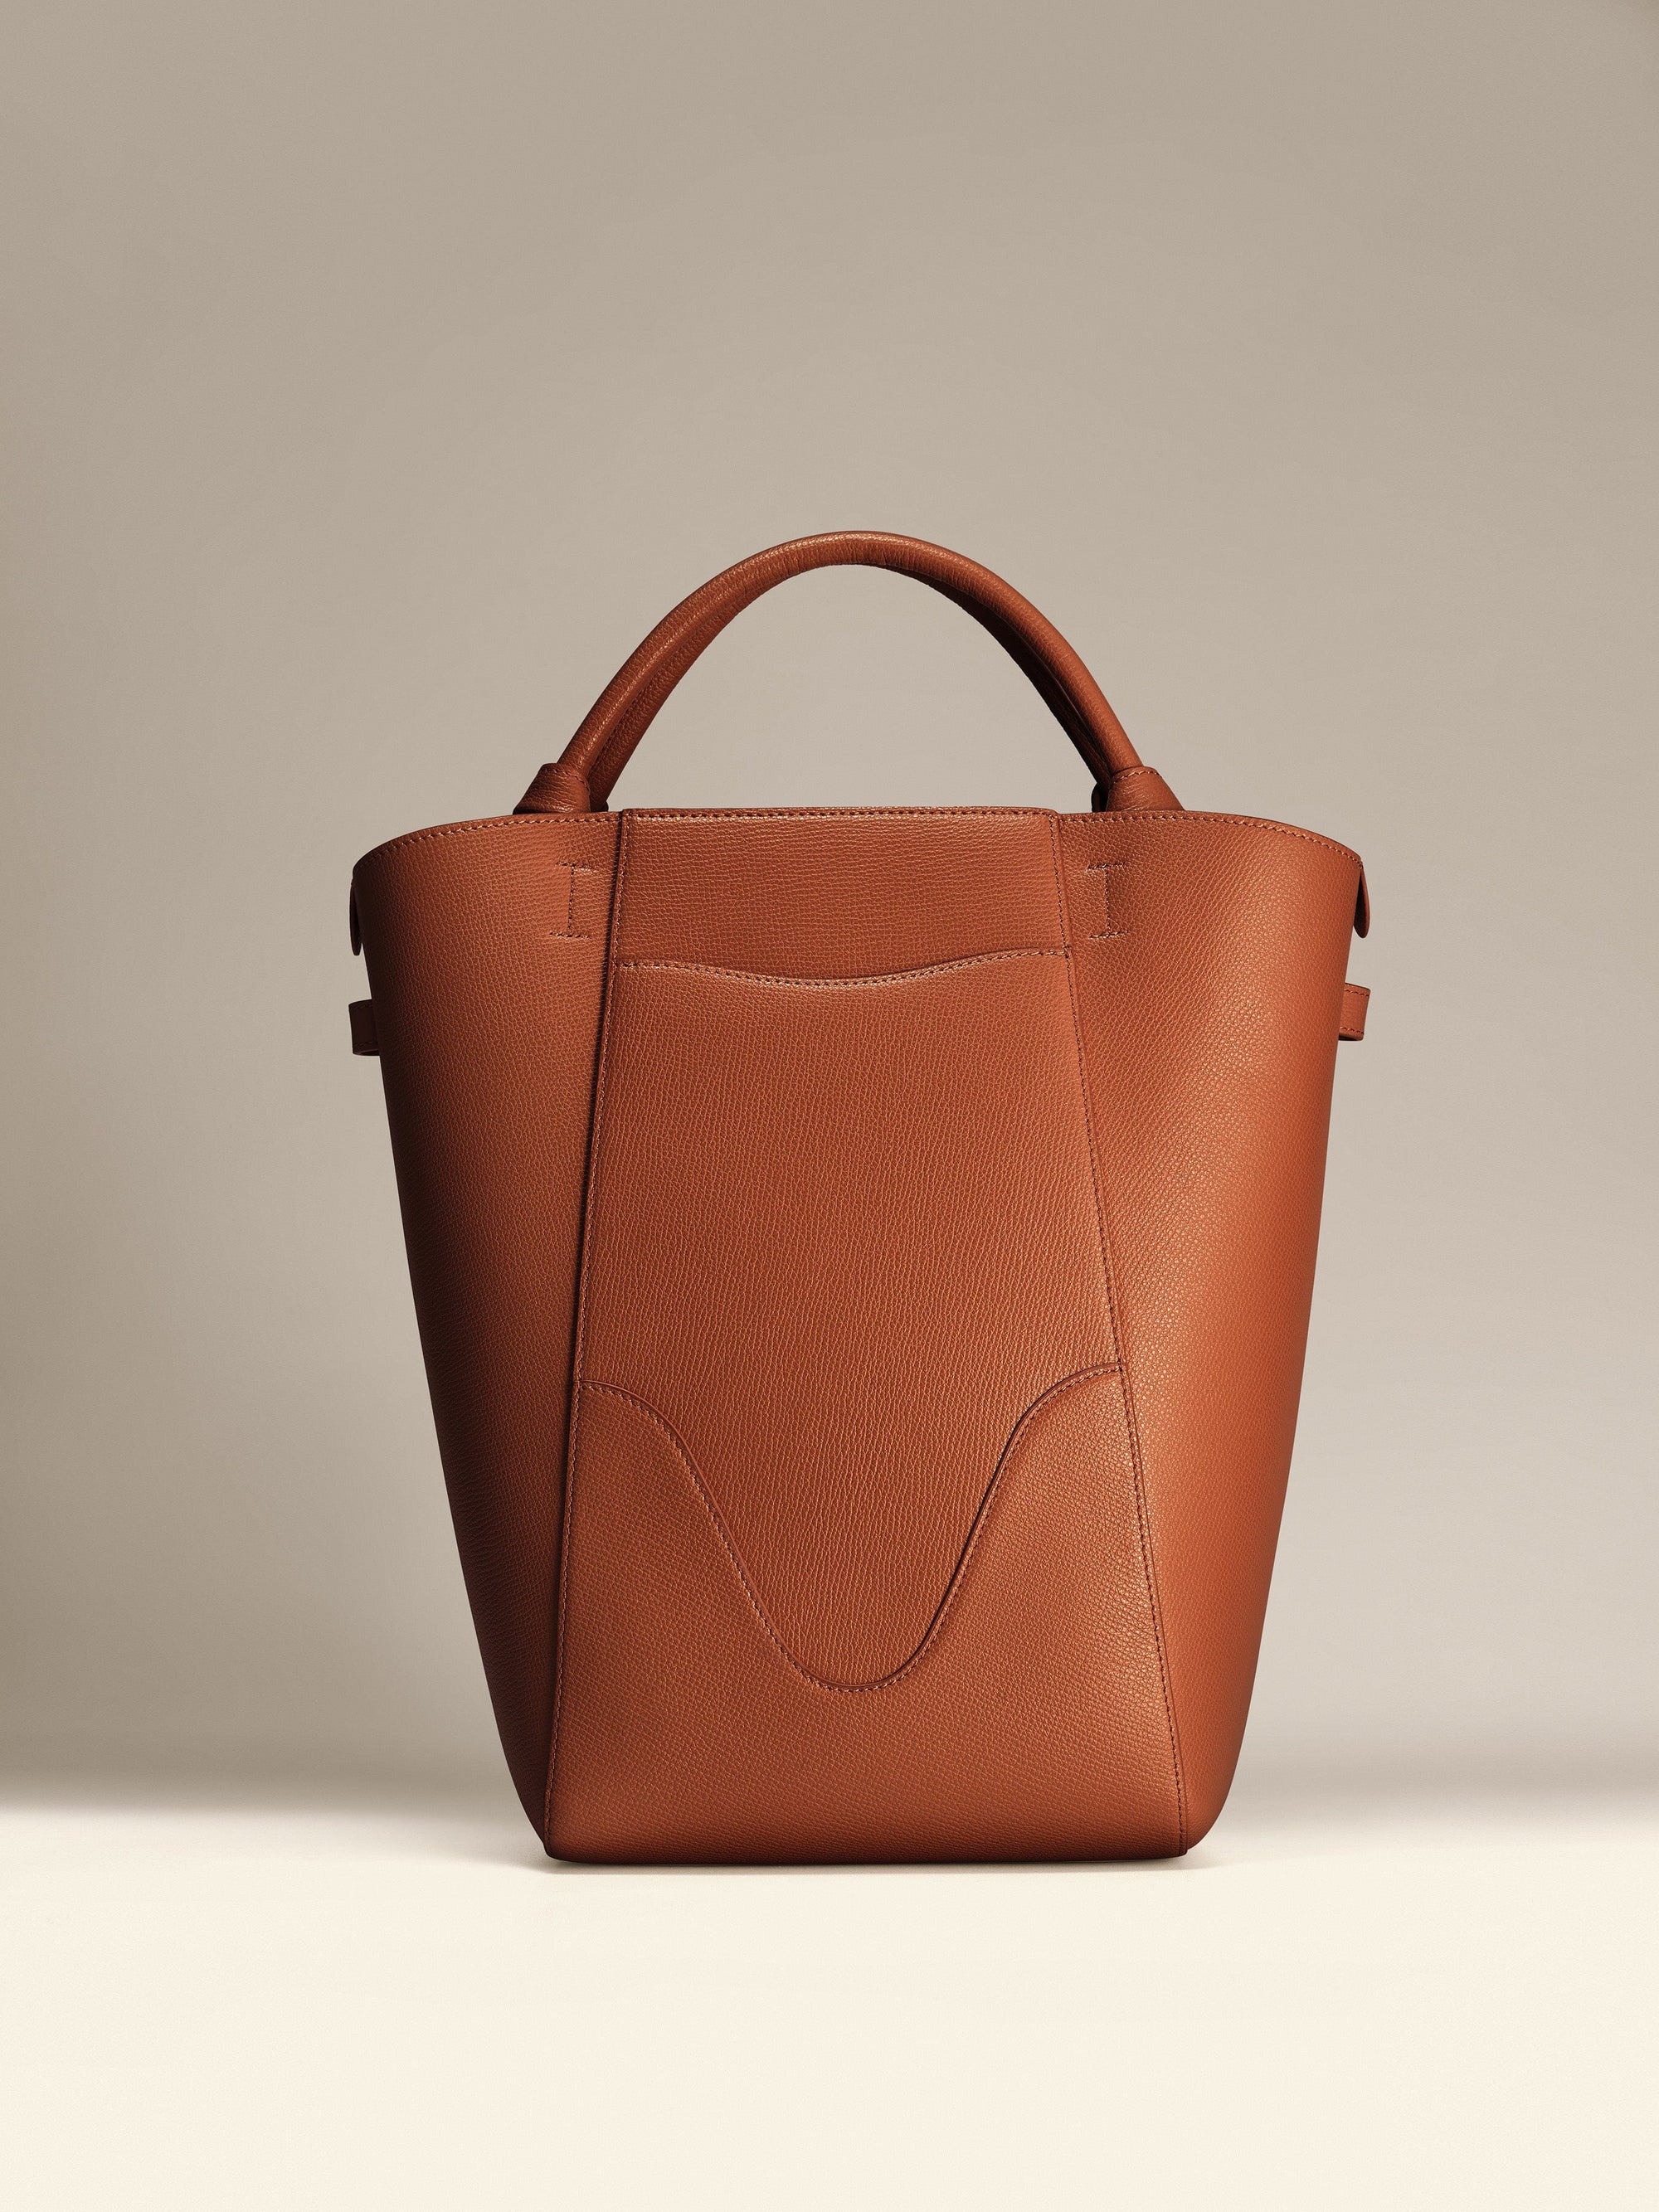 OLEADA Bucket Bag > Leather Tote Bag For Women > Large Capacity Handbag > Convertible To Shoulder Bag > stylish 14 inch laptop bag Marina Bucket Chestnut